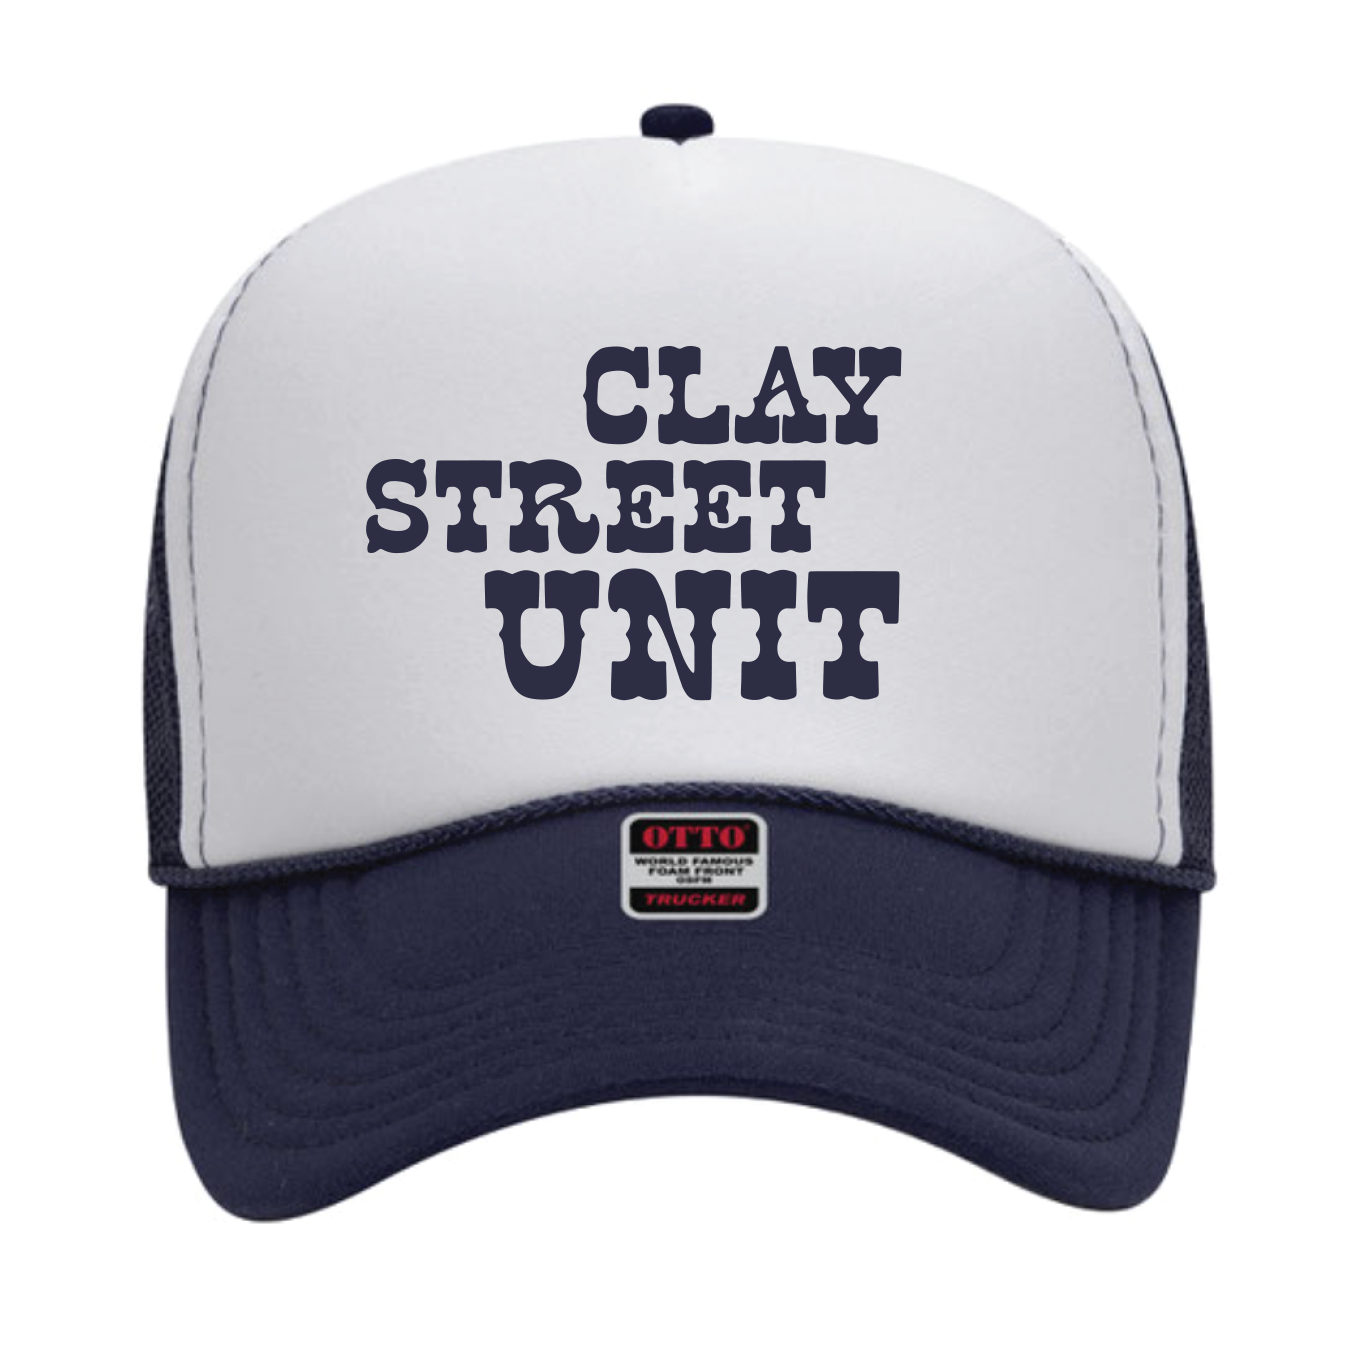 Clay Street Unit Trucker Hat - Blue Text